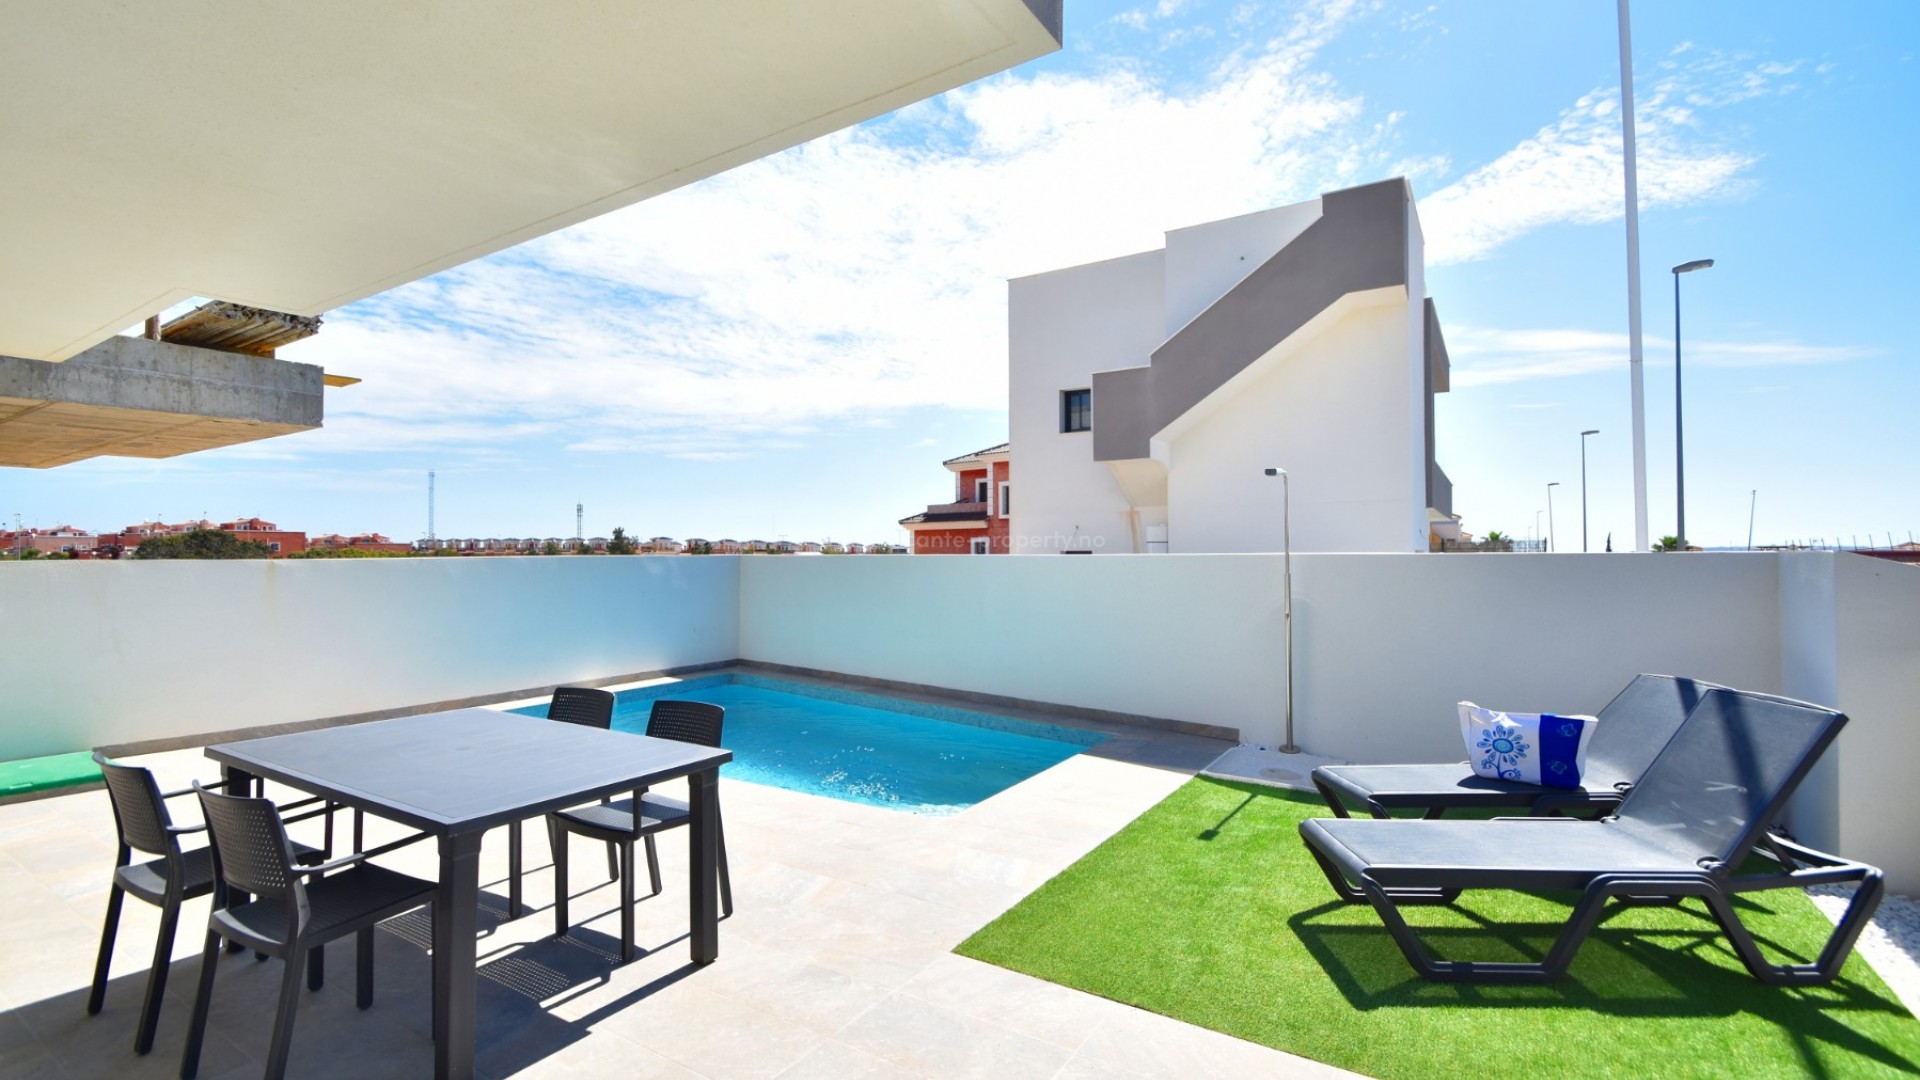 Villa i Los Montesinos, Alicante, huset har 104,7 m2, 3 soverom, 2 bad, terrasse på 30 m2, 30 minutter med bil fra Alicante flyplass, 10 min til strand.   